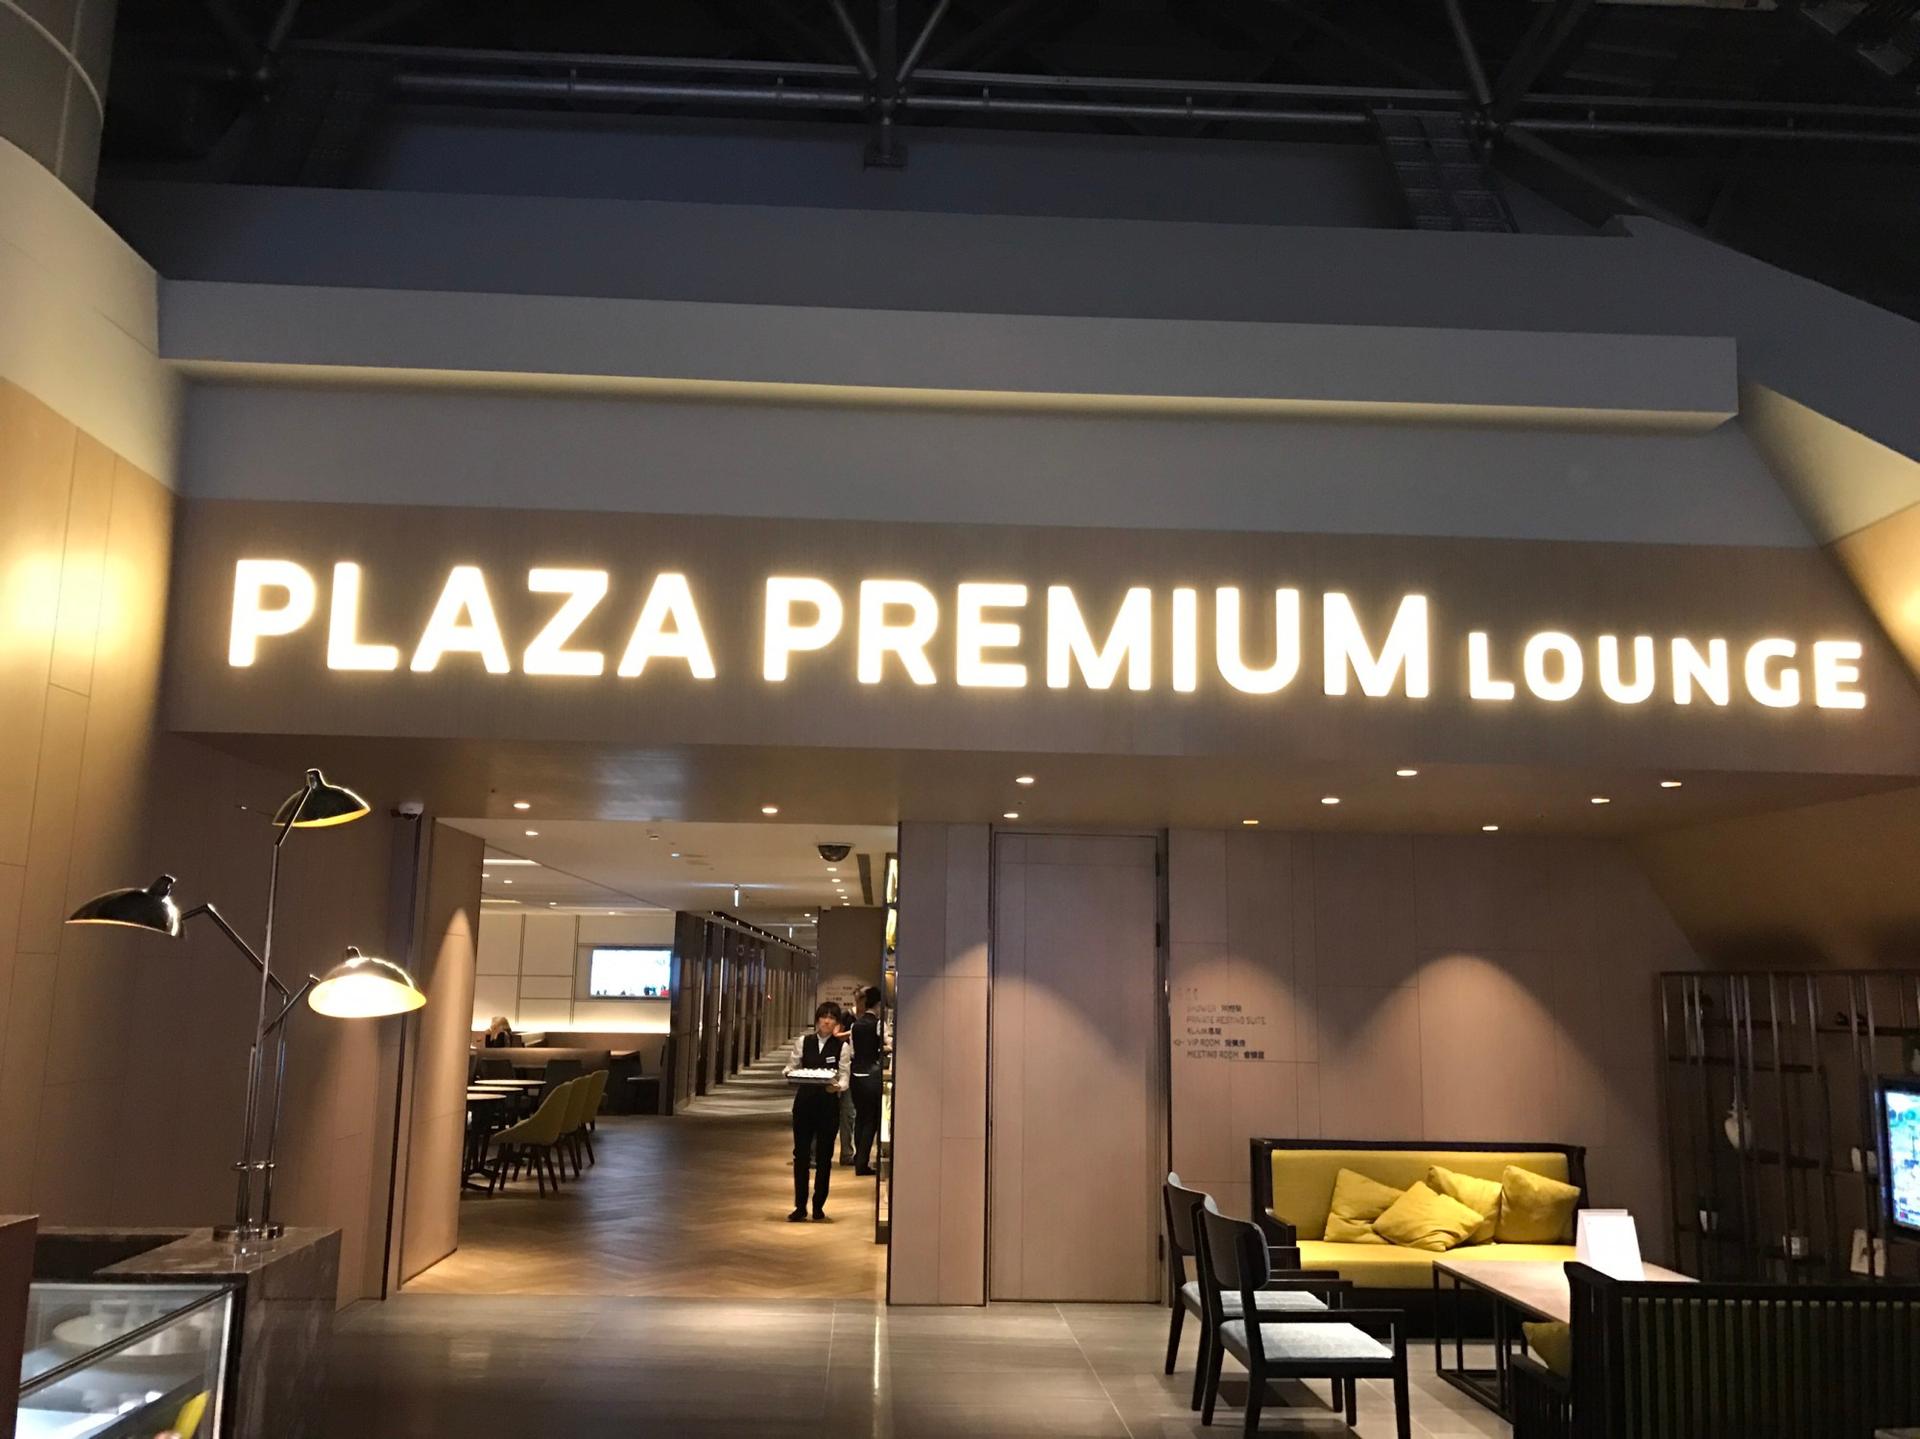 Plaza Premium Lounge (Zone A) image 56 of 79